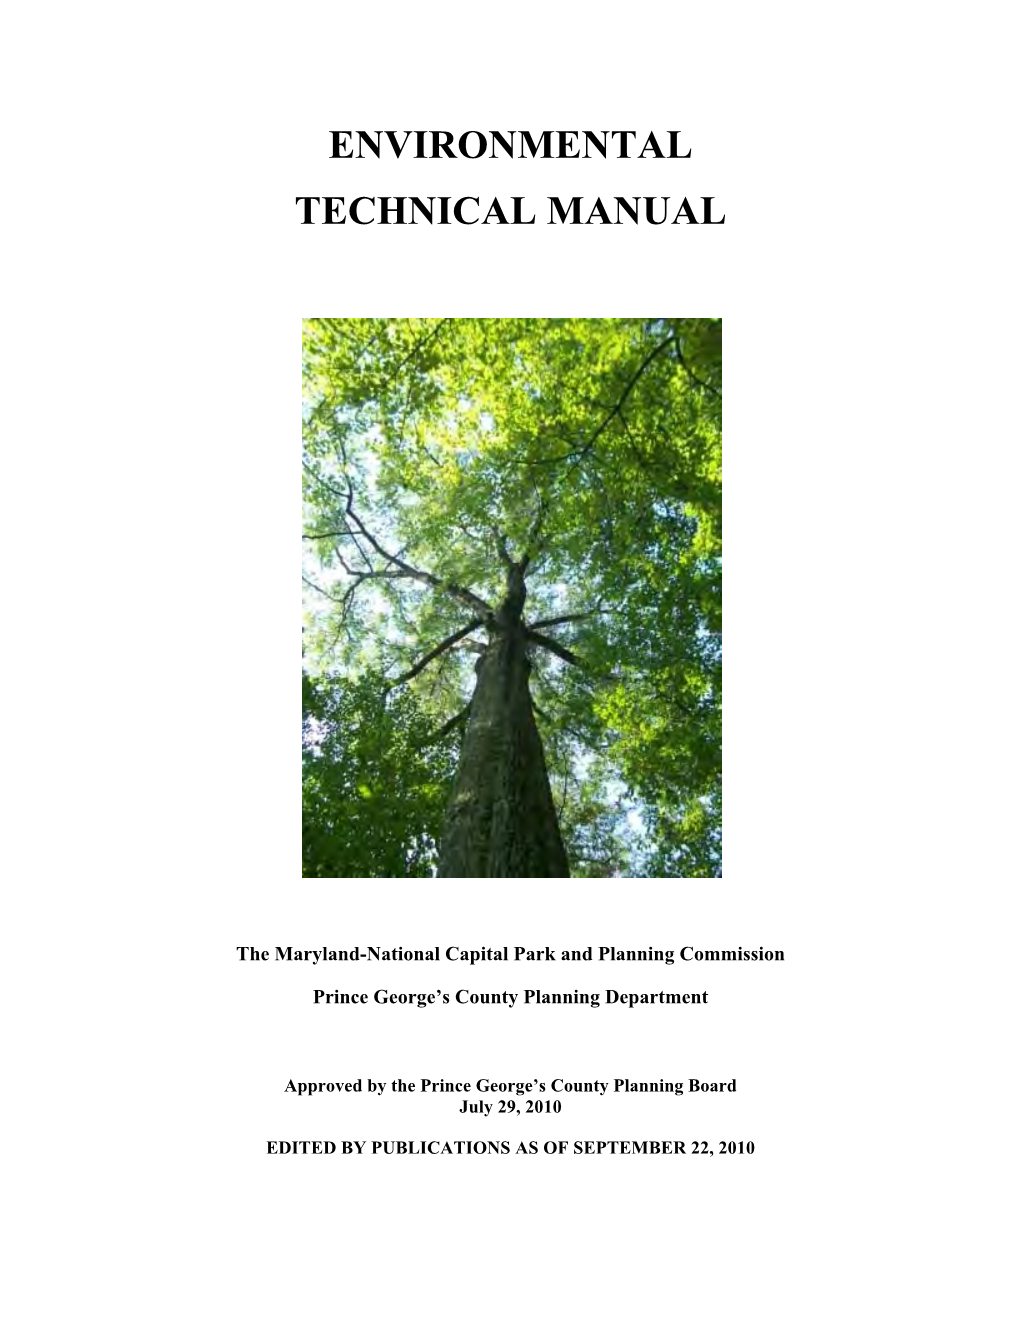 Environmental Technical Manual